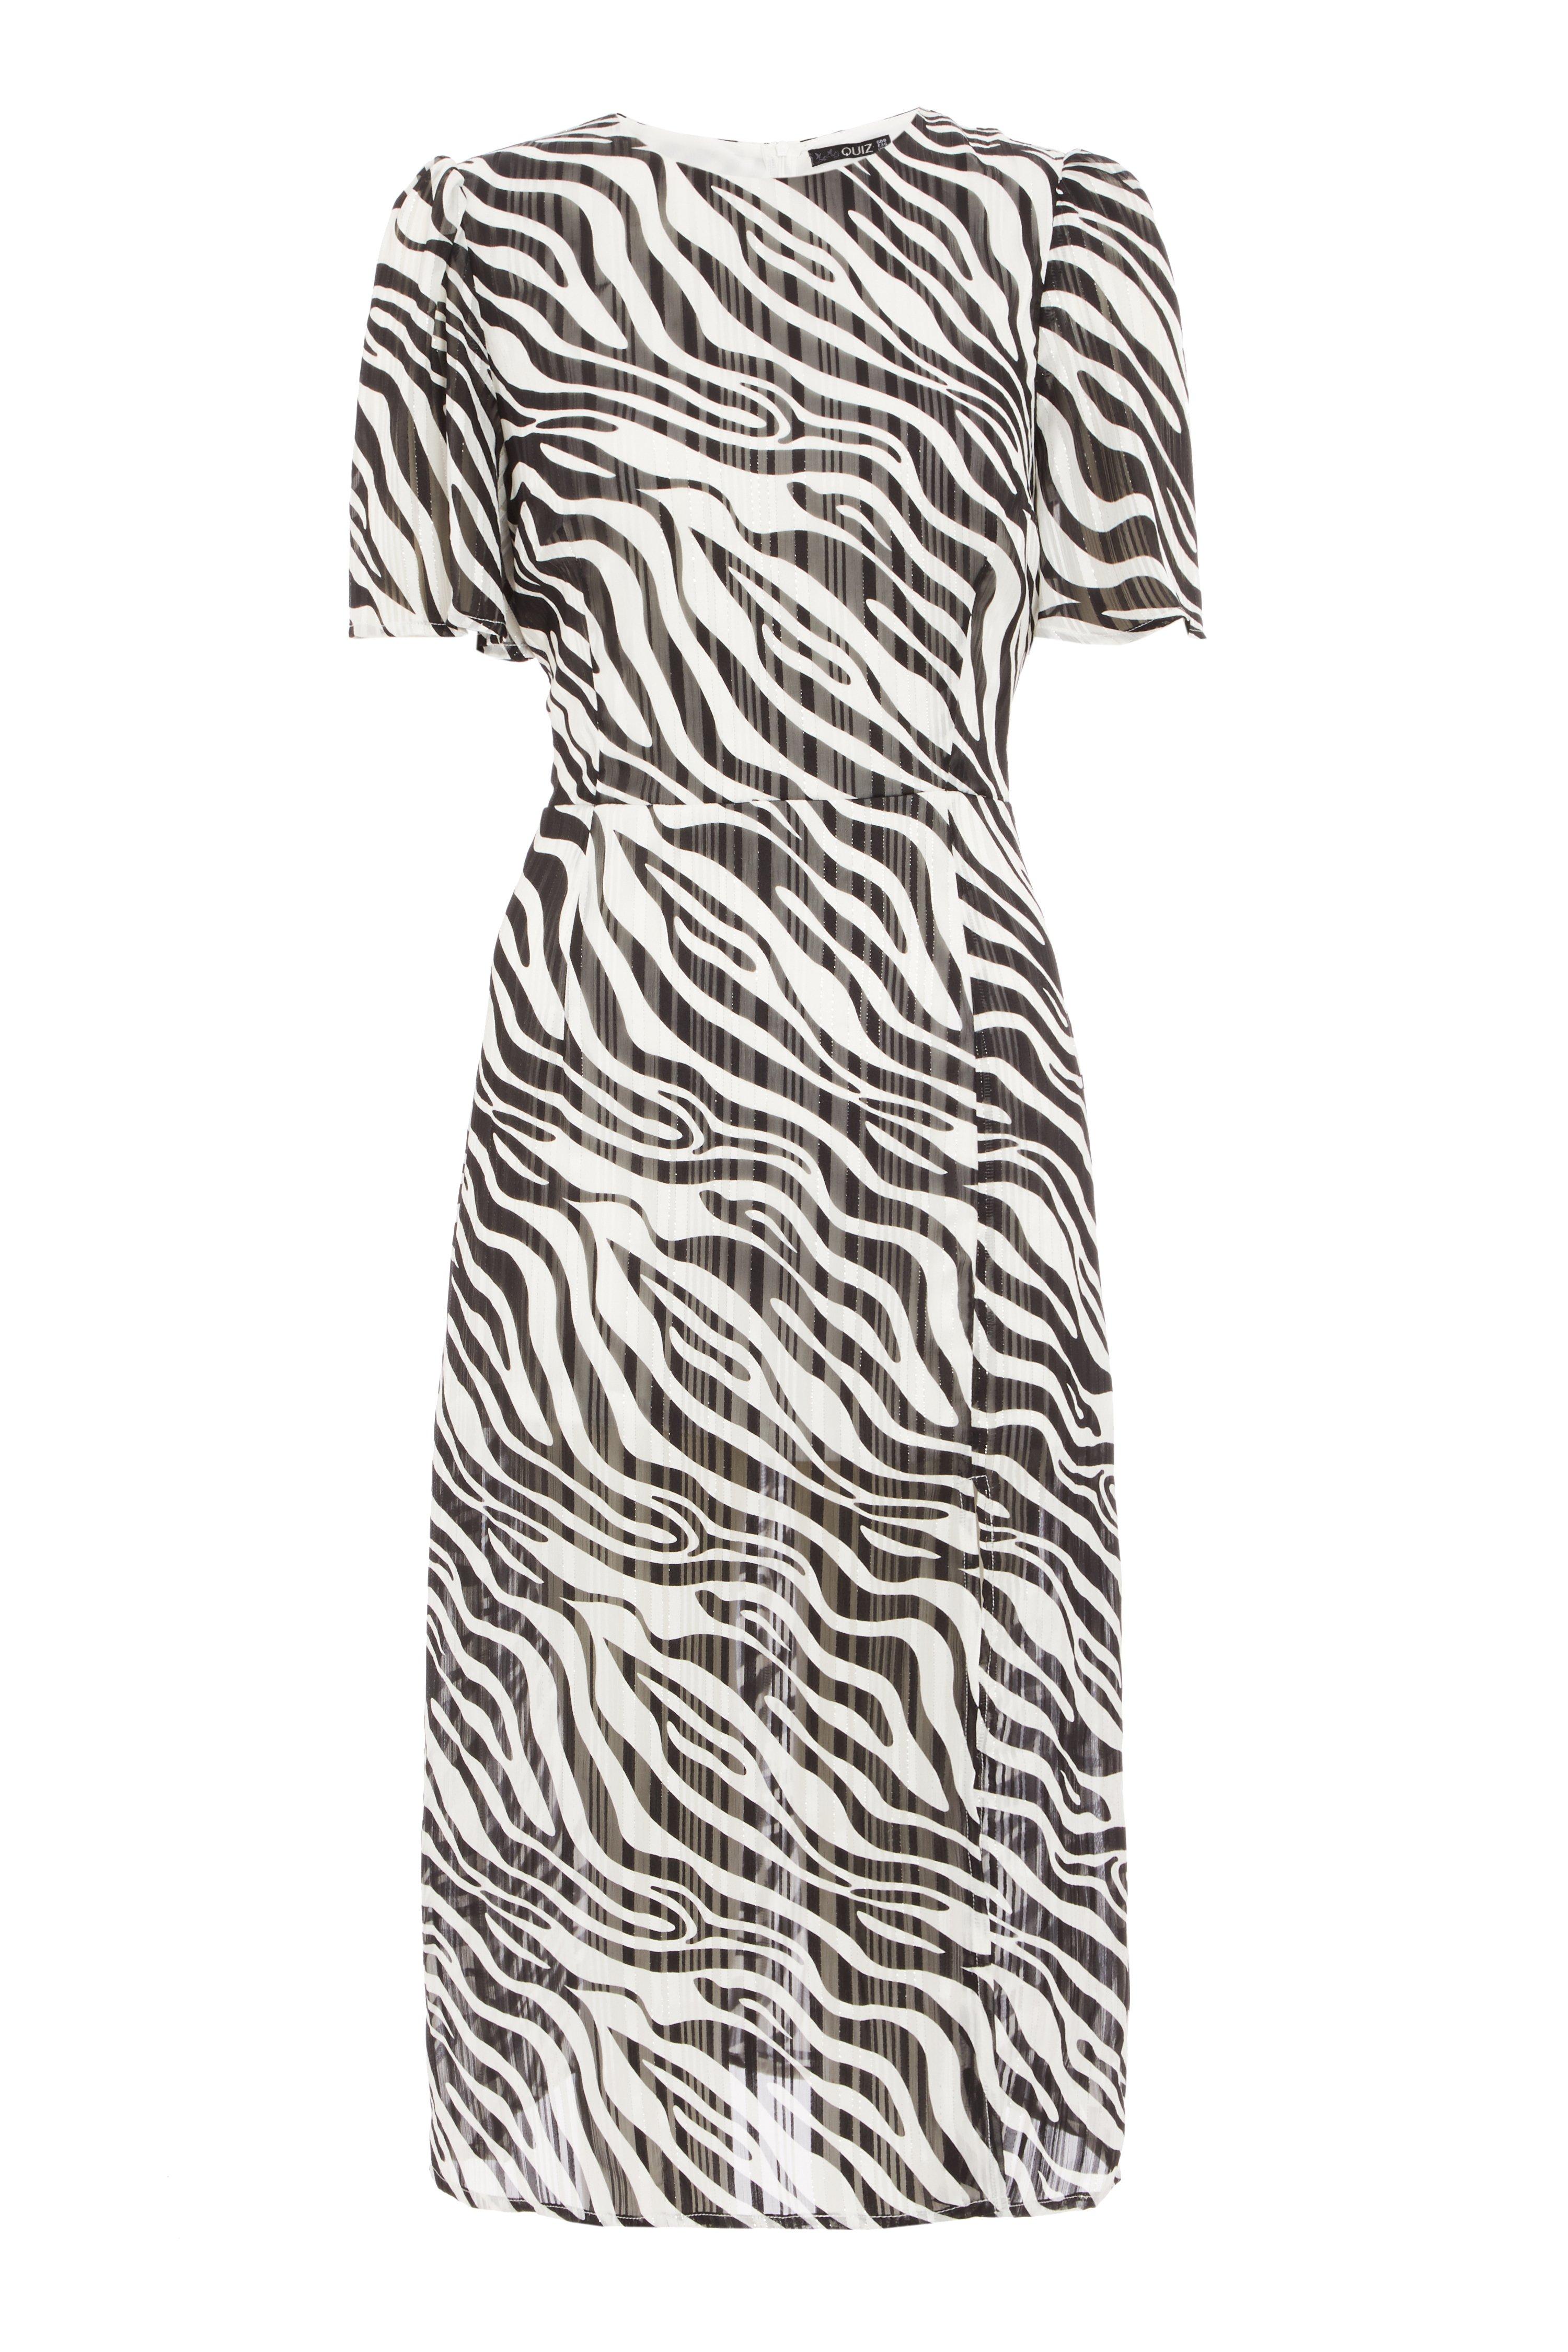 Petite Black & White Zebra Print Midi Dress - Quiz Clothing